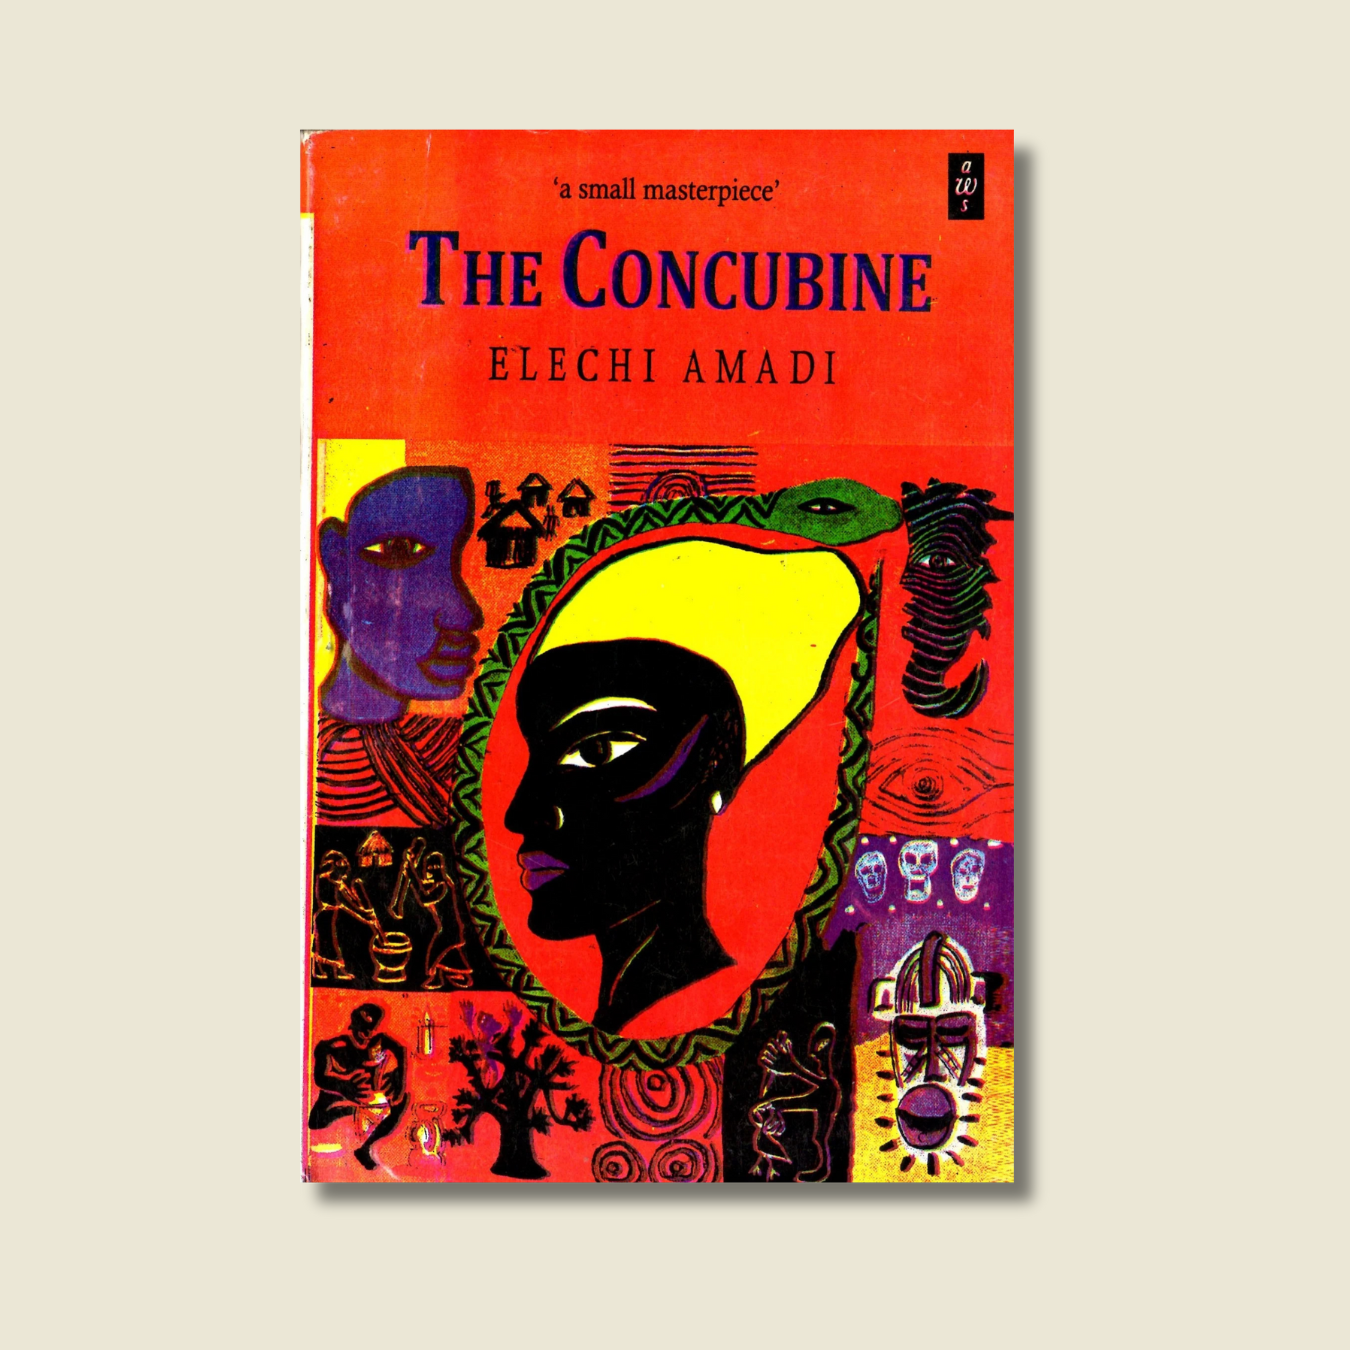 THE CONCUBINE BY ELECHI AMADI